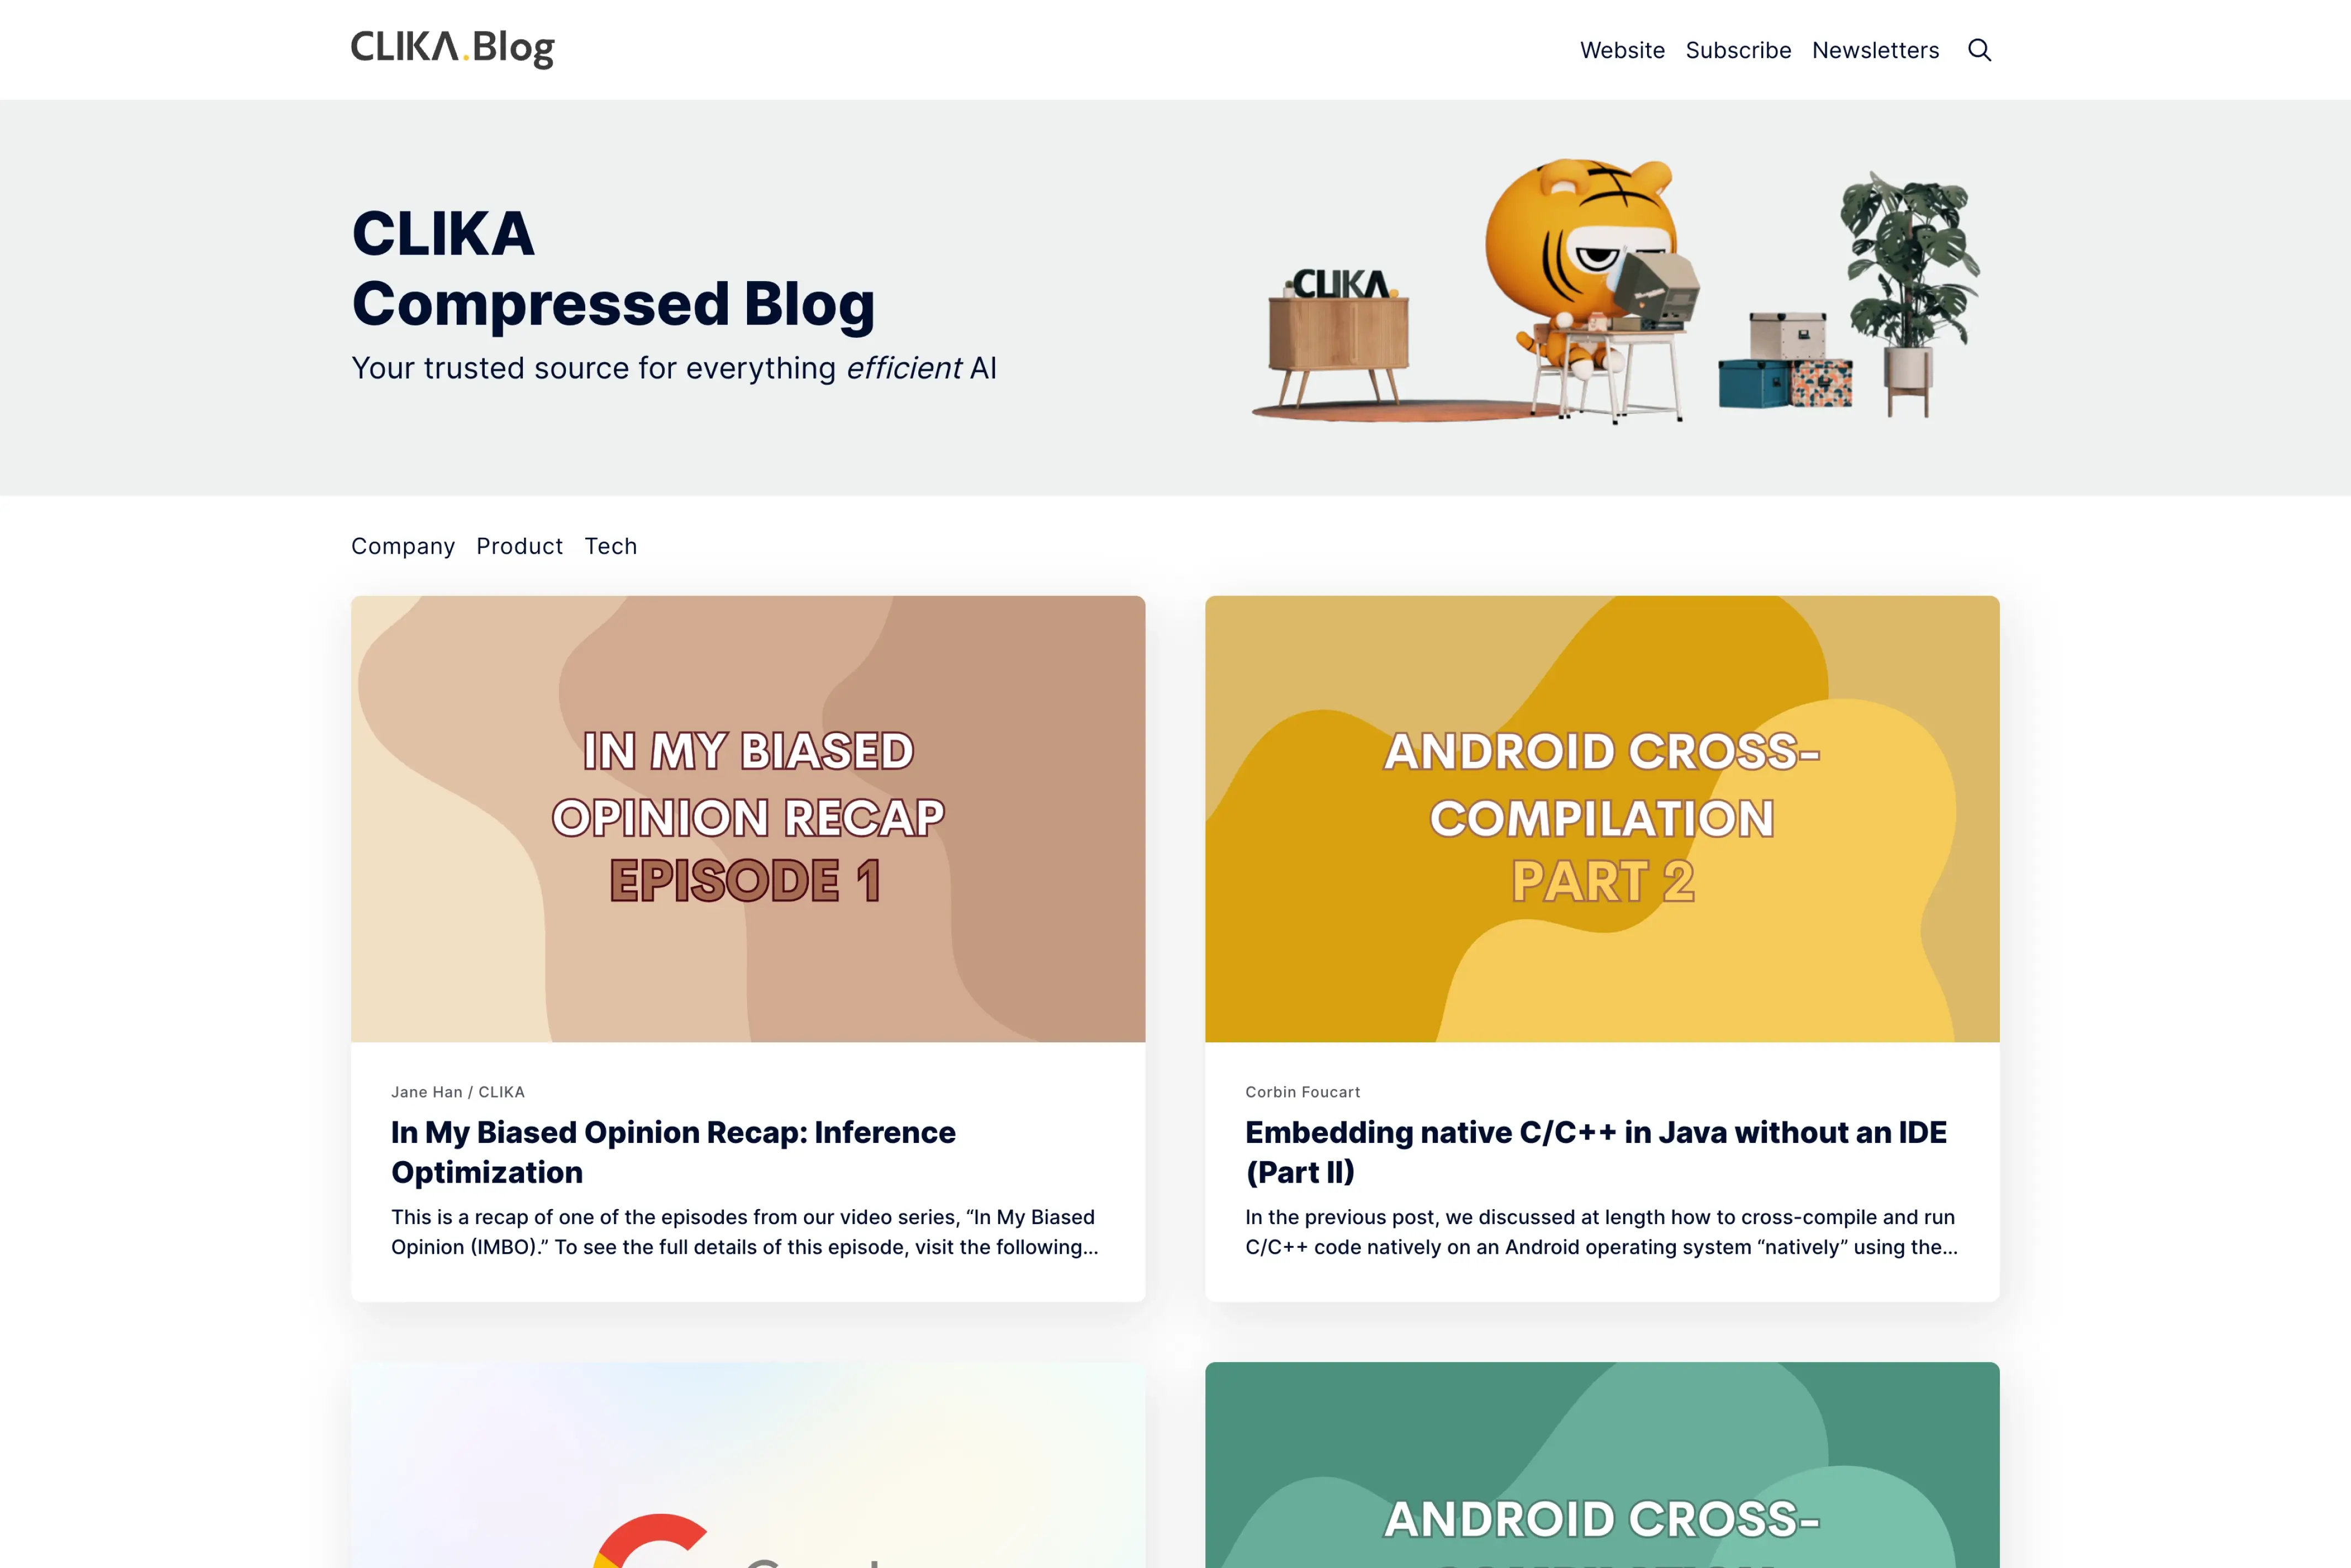 CLIKA Compressed Blog